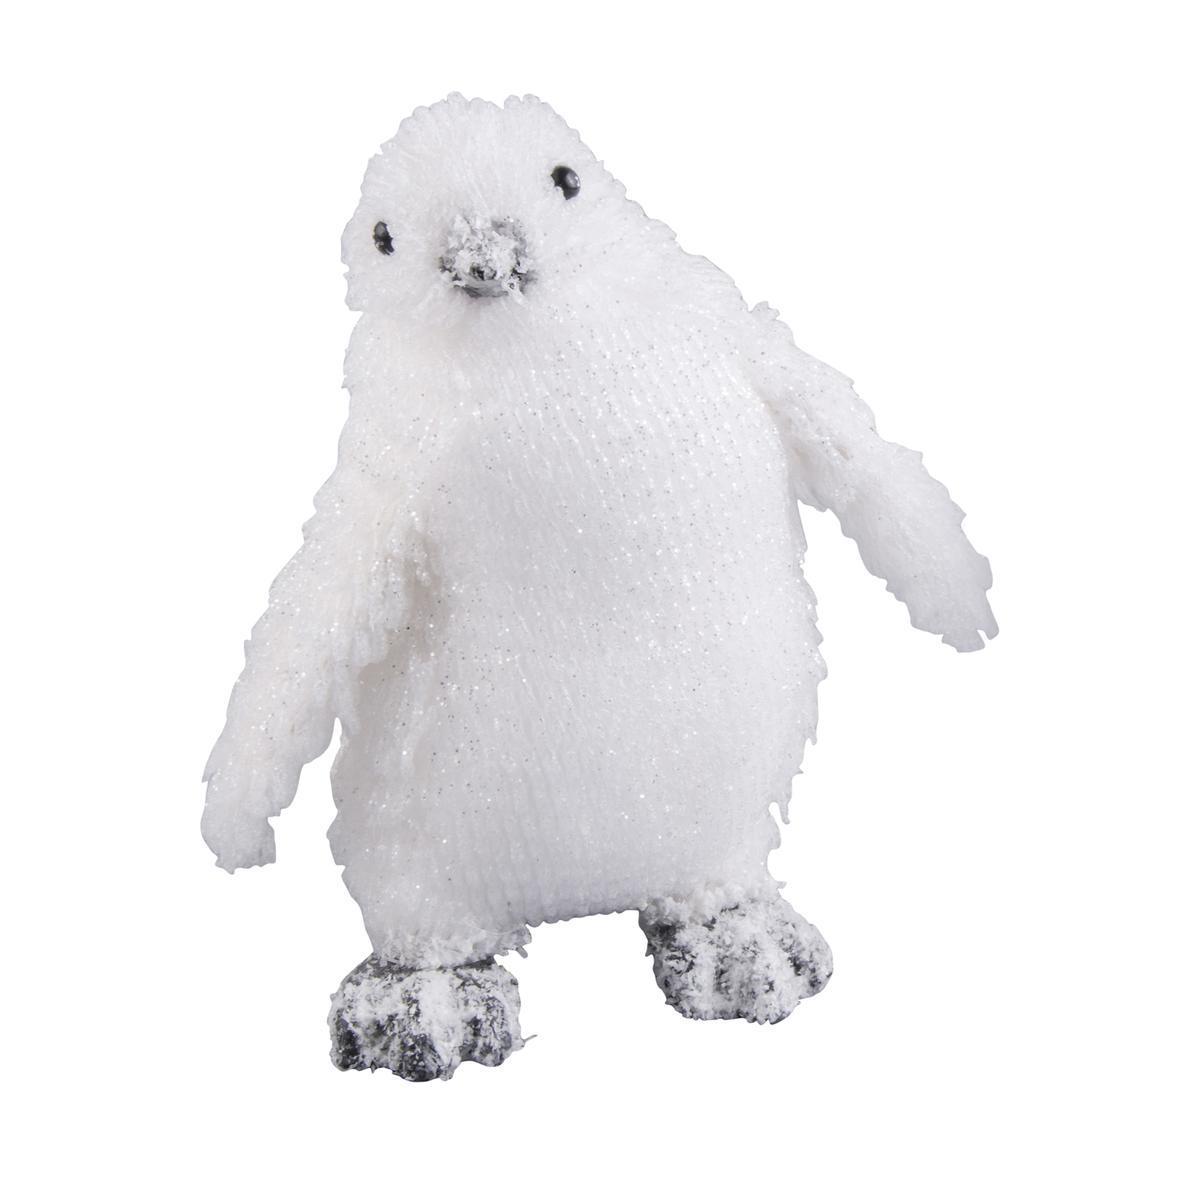 Pingouin - Polystyrène - 8 x 15 x H 20 cm - Blanc, gris et noir